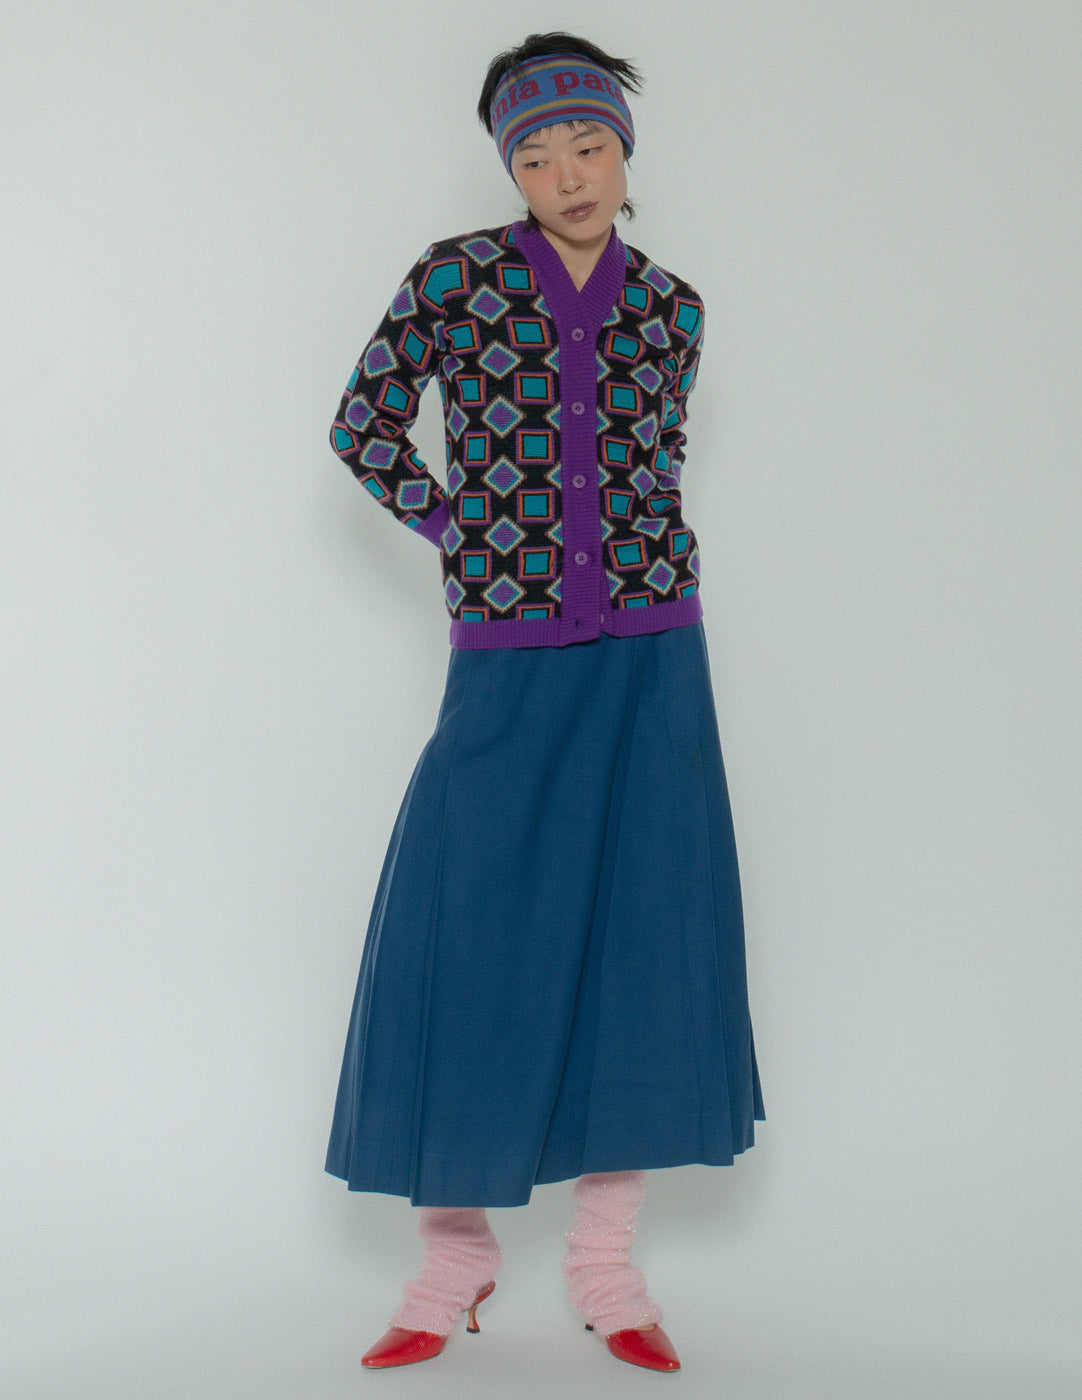 Yves Saint Laurent vintage geometric patterned cardigan